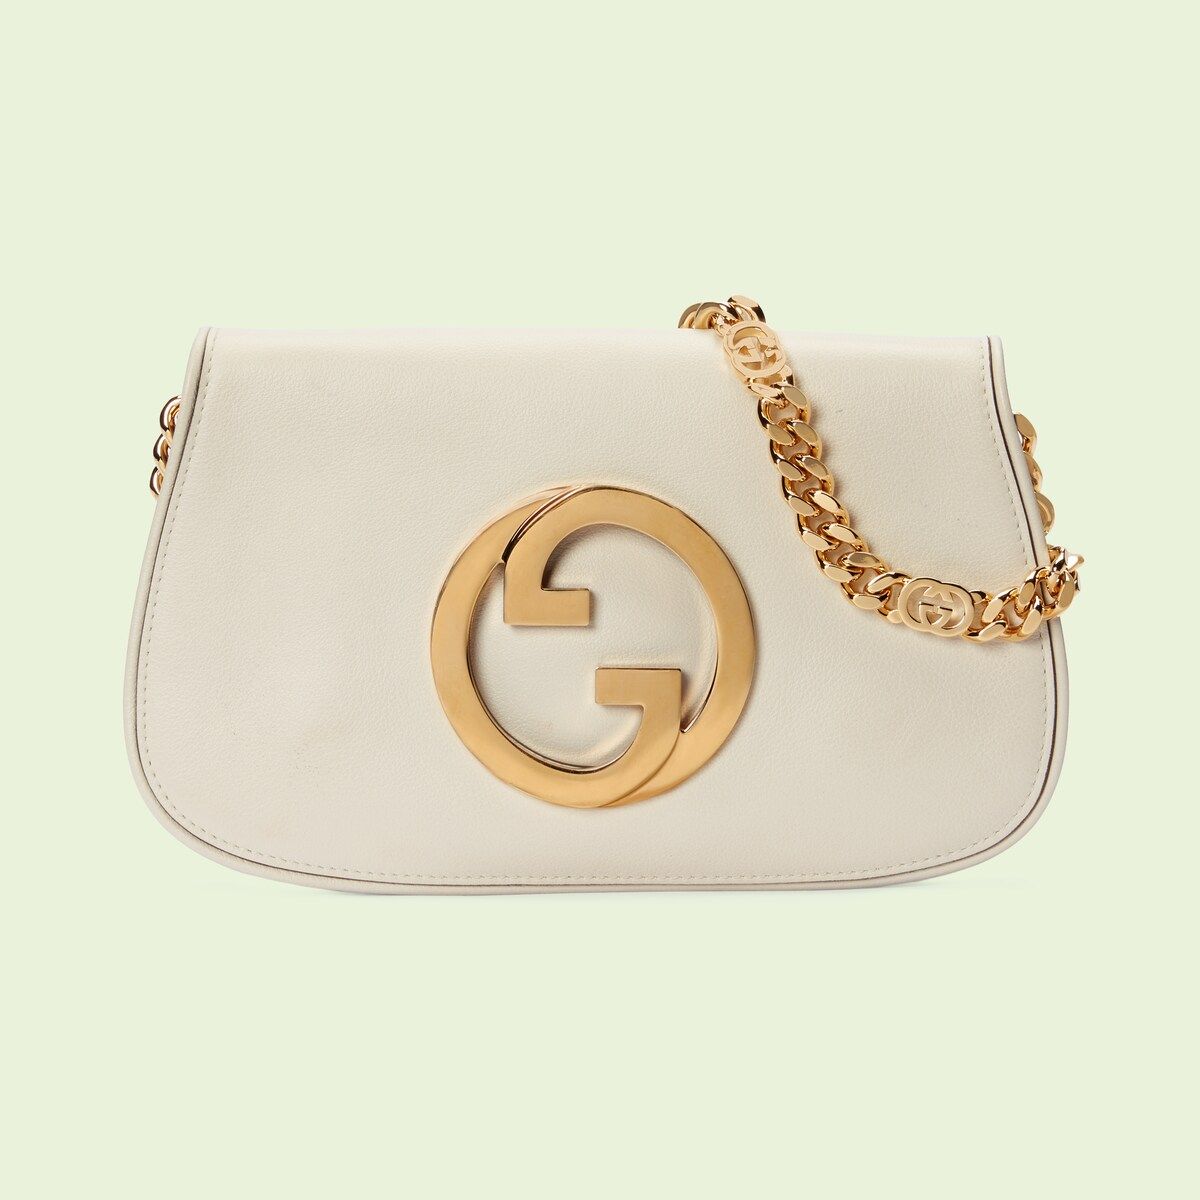 Gucci - Gucci Blondie shoulder bag | Gucci (US)